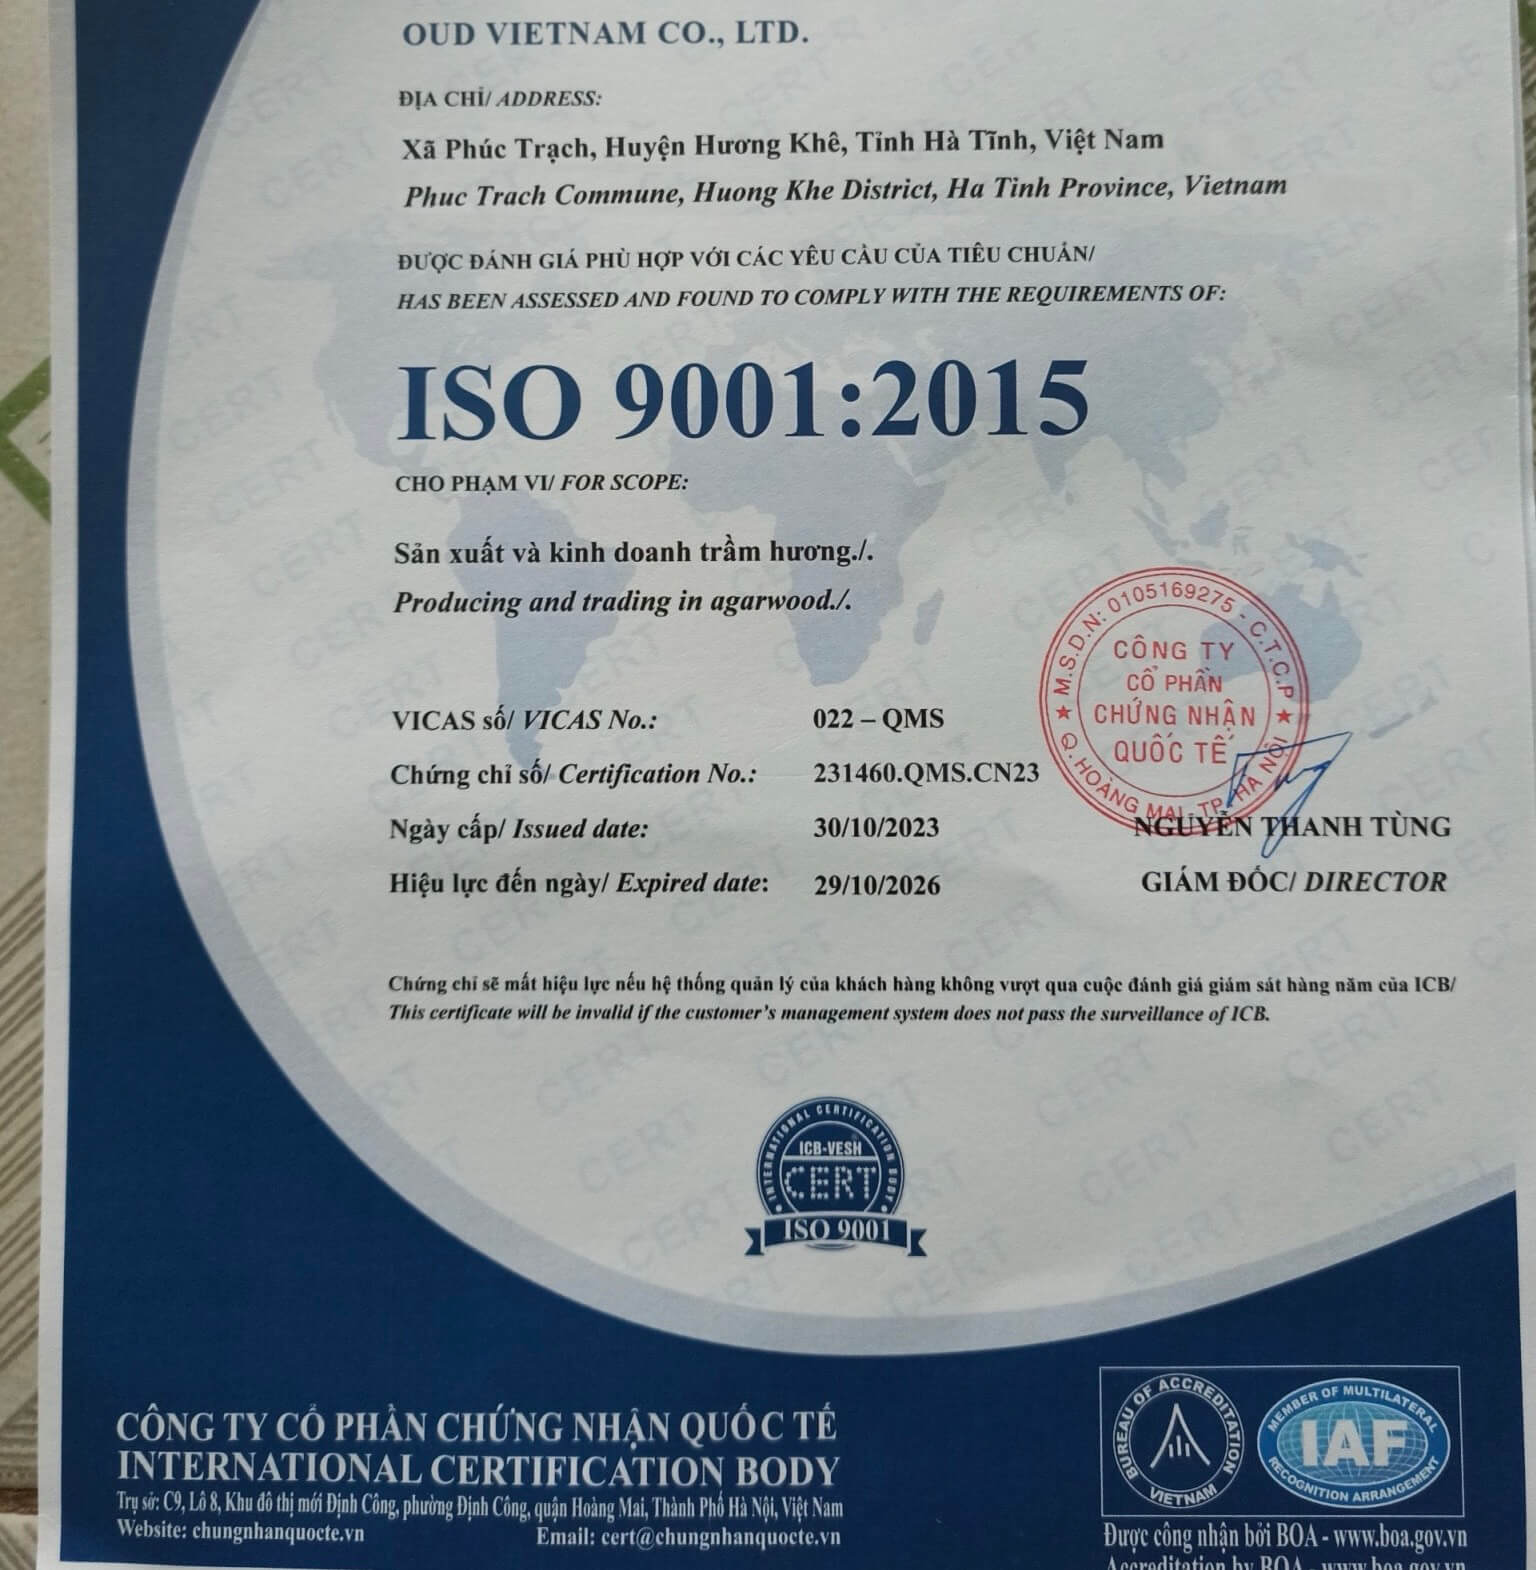 Oud Vietnam got ISO 9001:2015 Certification